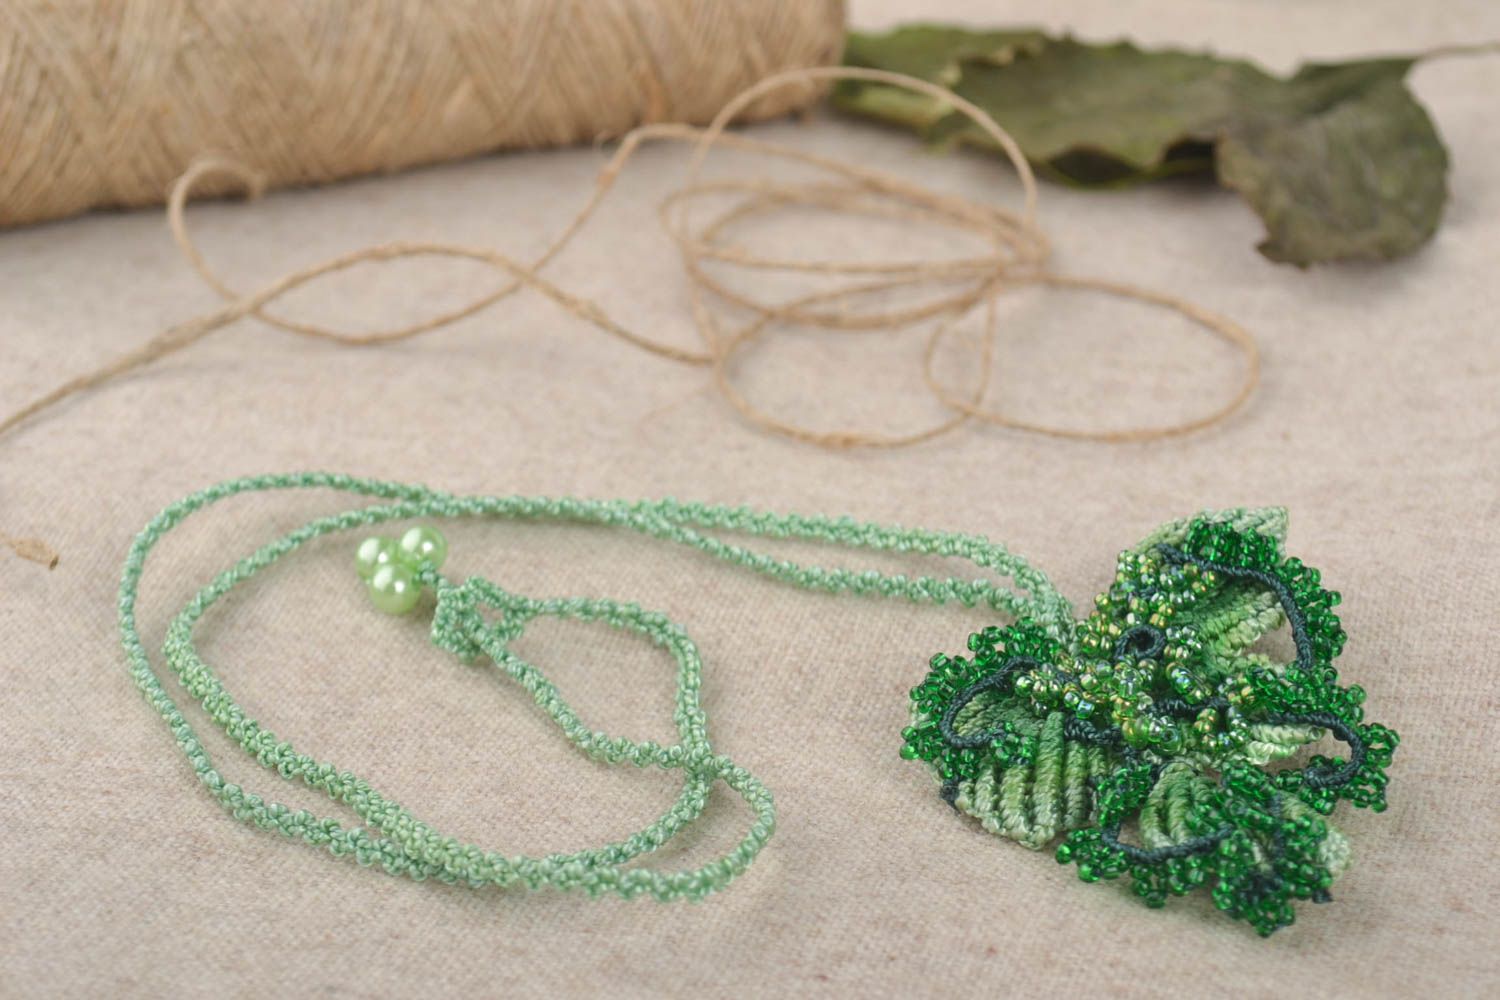 Handmade pendant designer pendant beaded pendant beads jewelry unusual gift photo 1